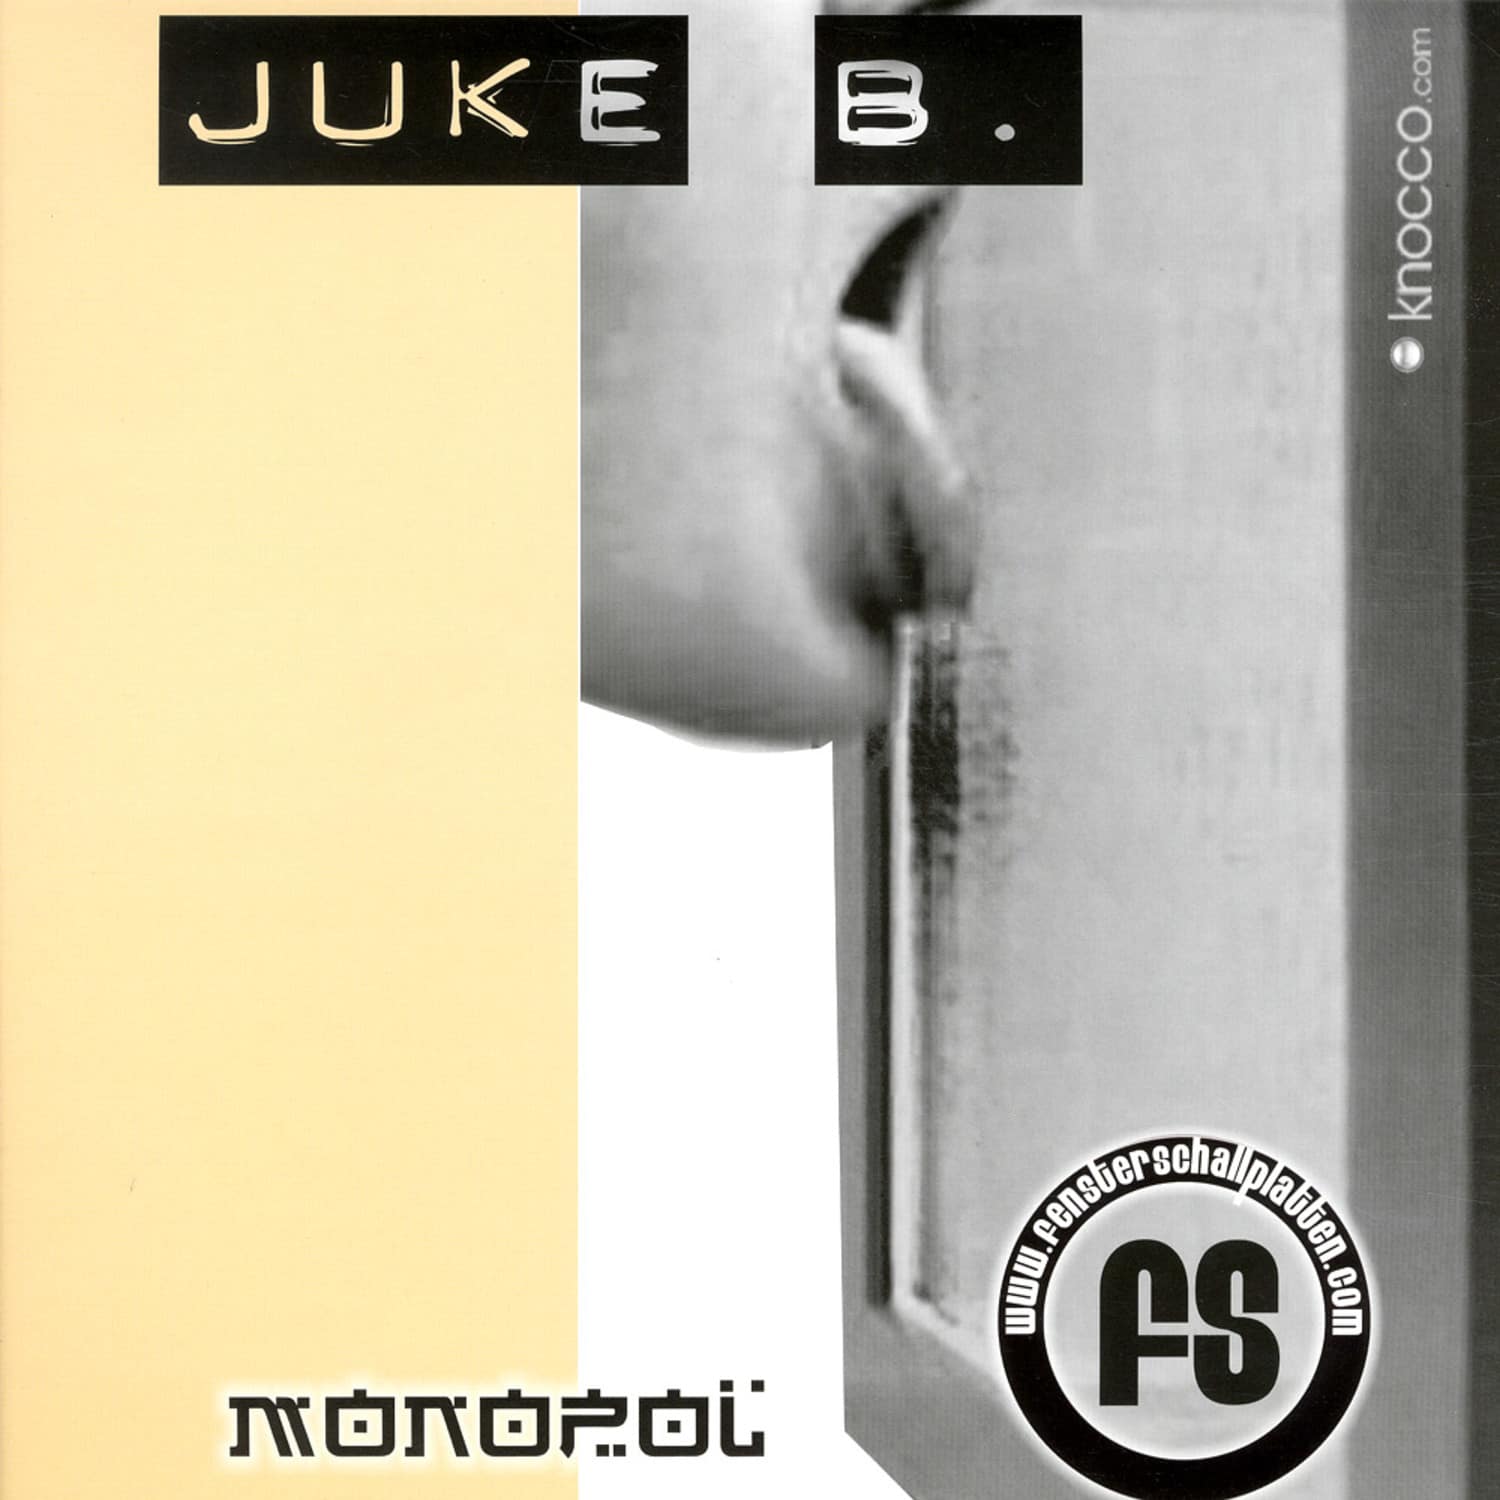 Juke B. - MONOPOL